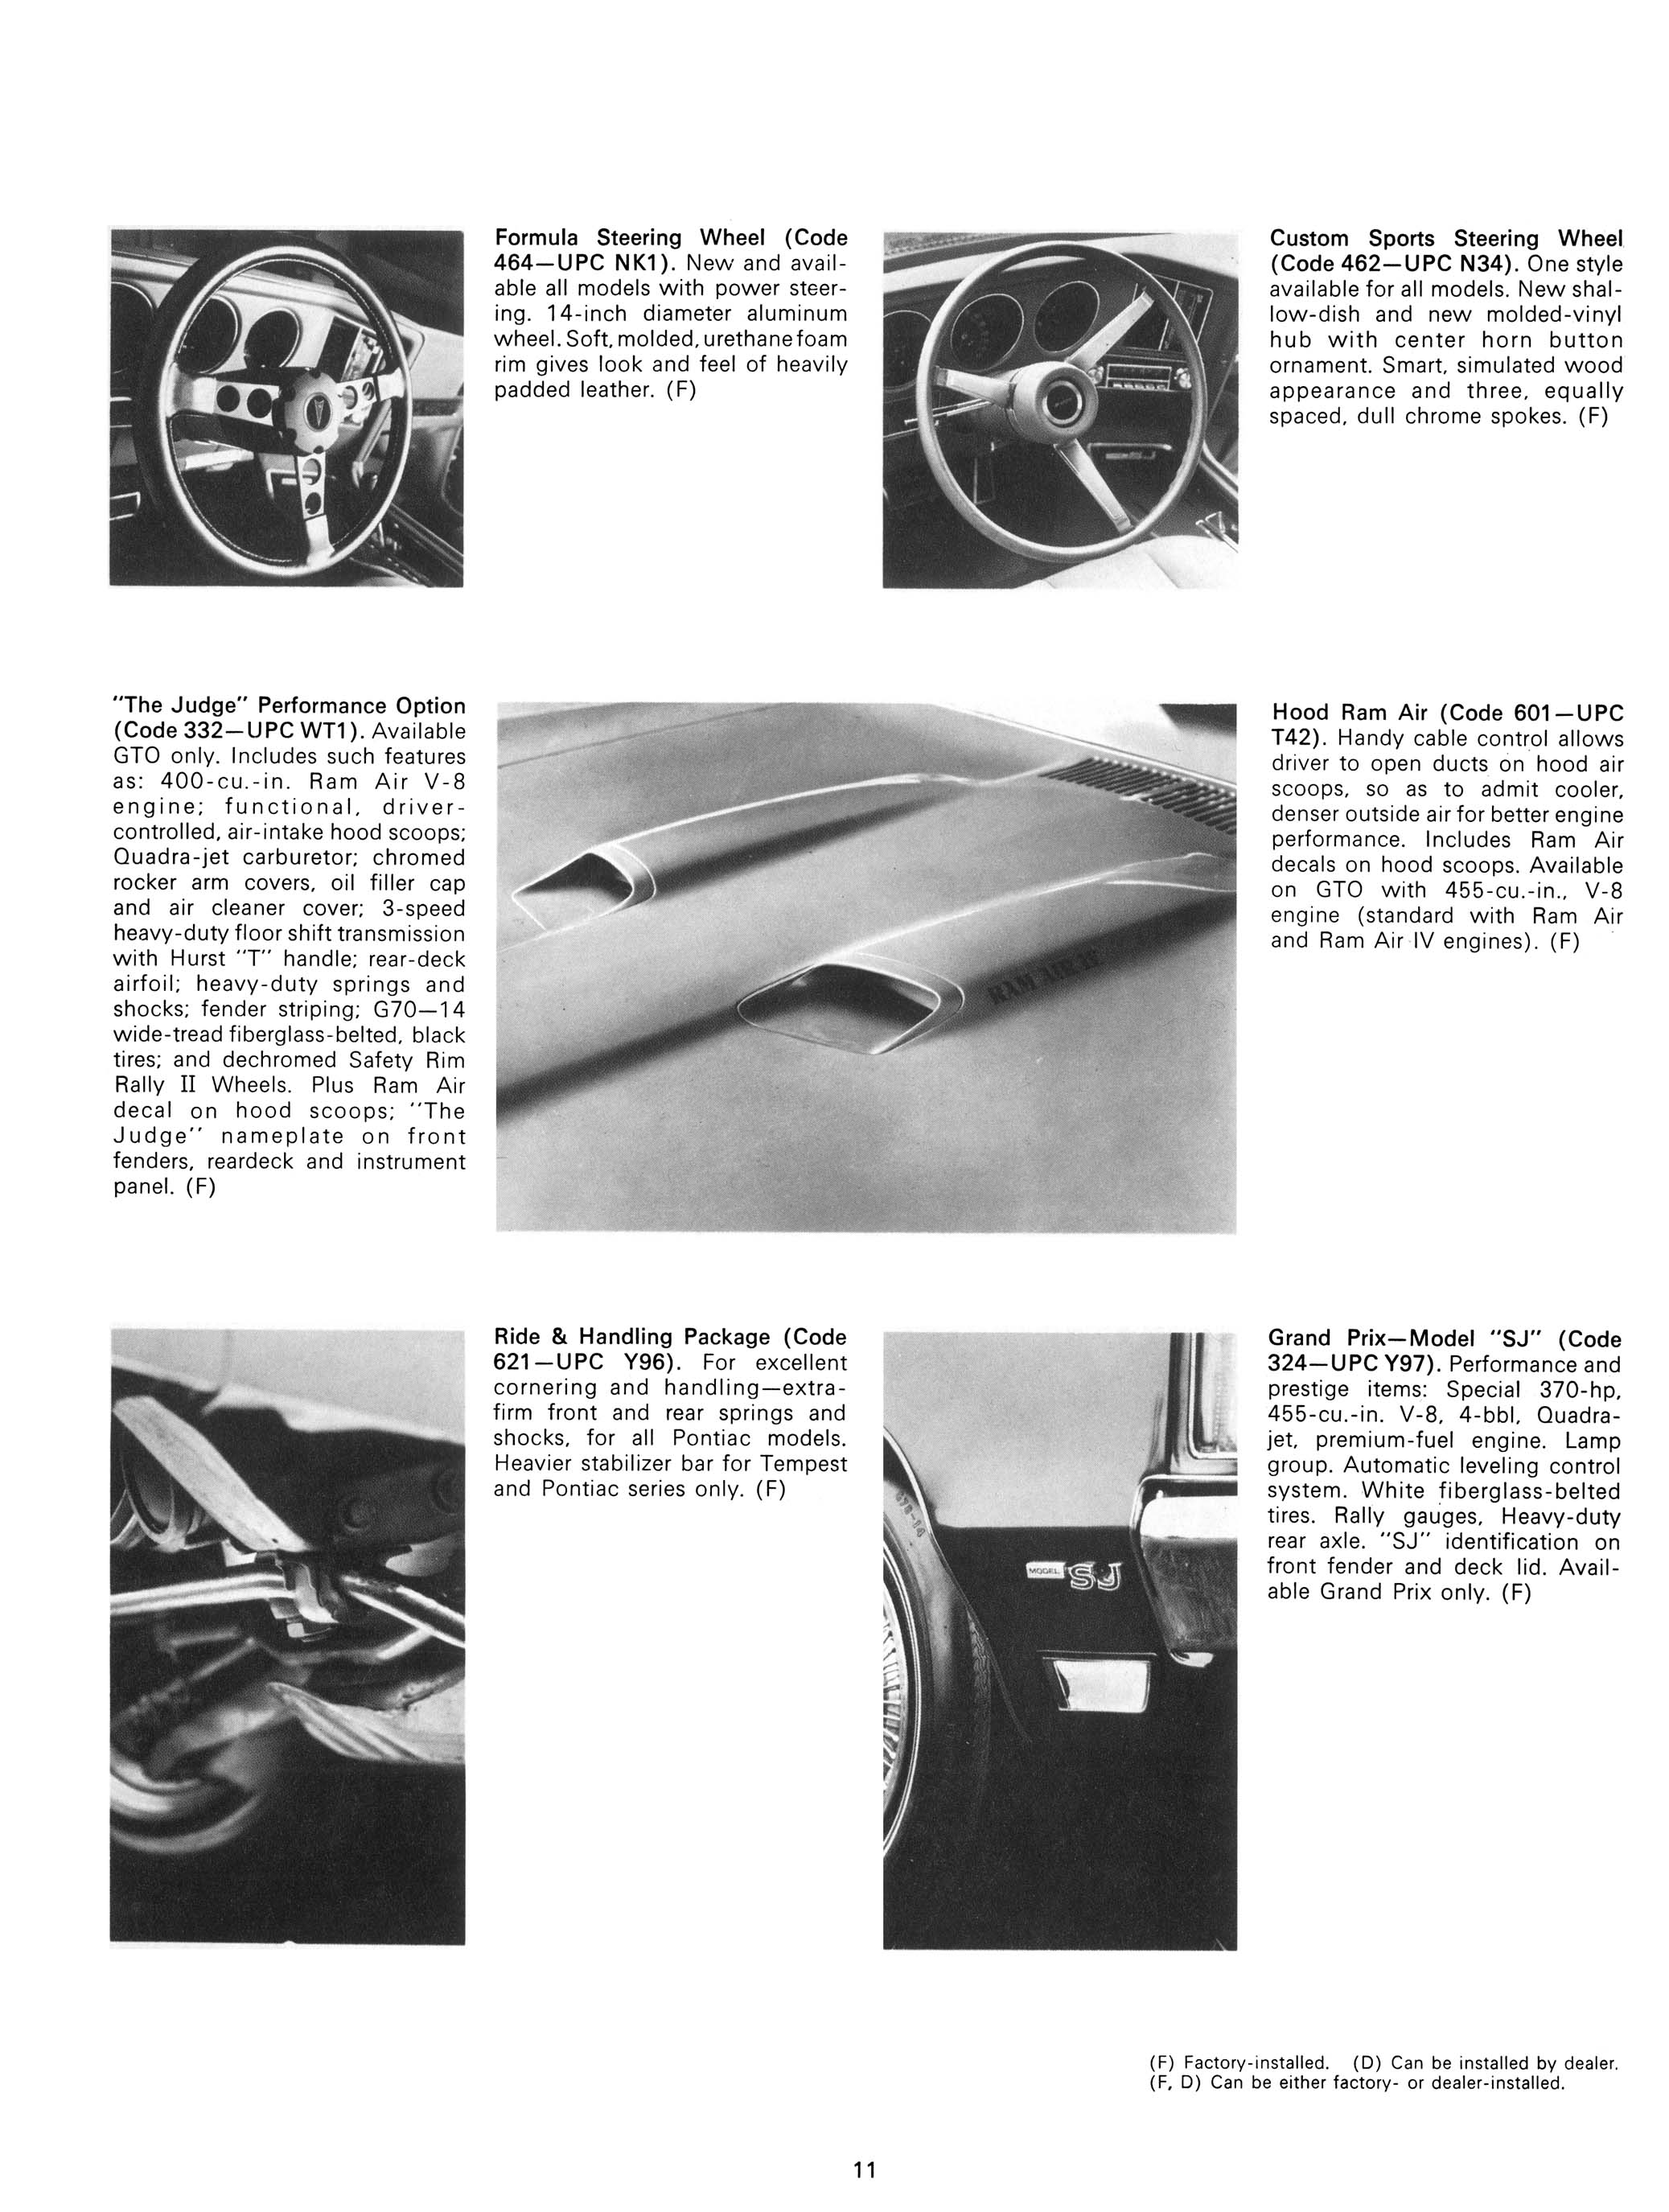 1970_Pontiac_Accessories-11